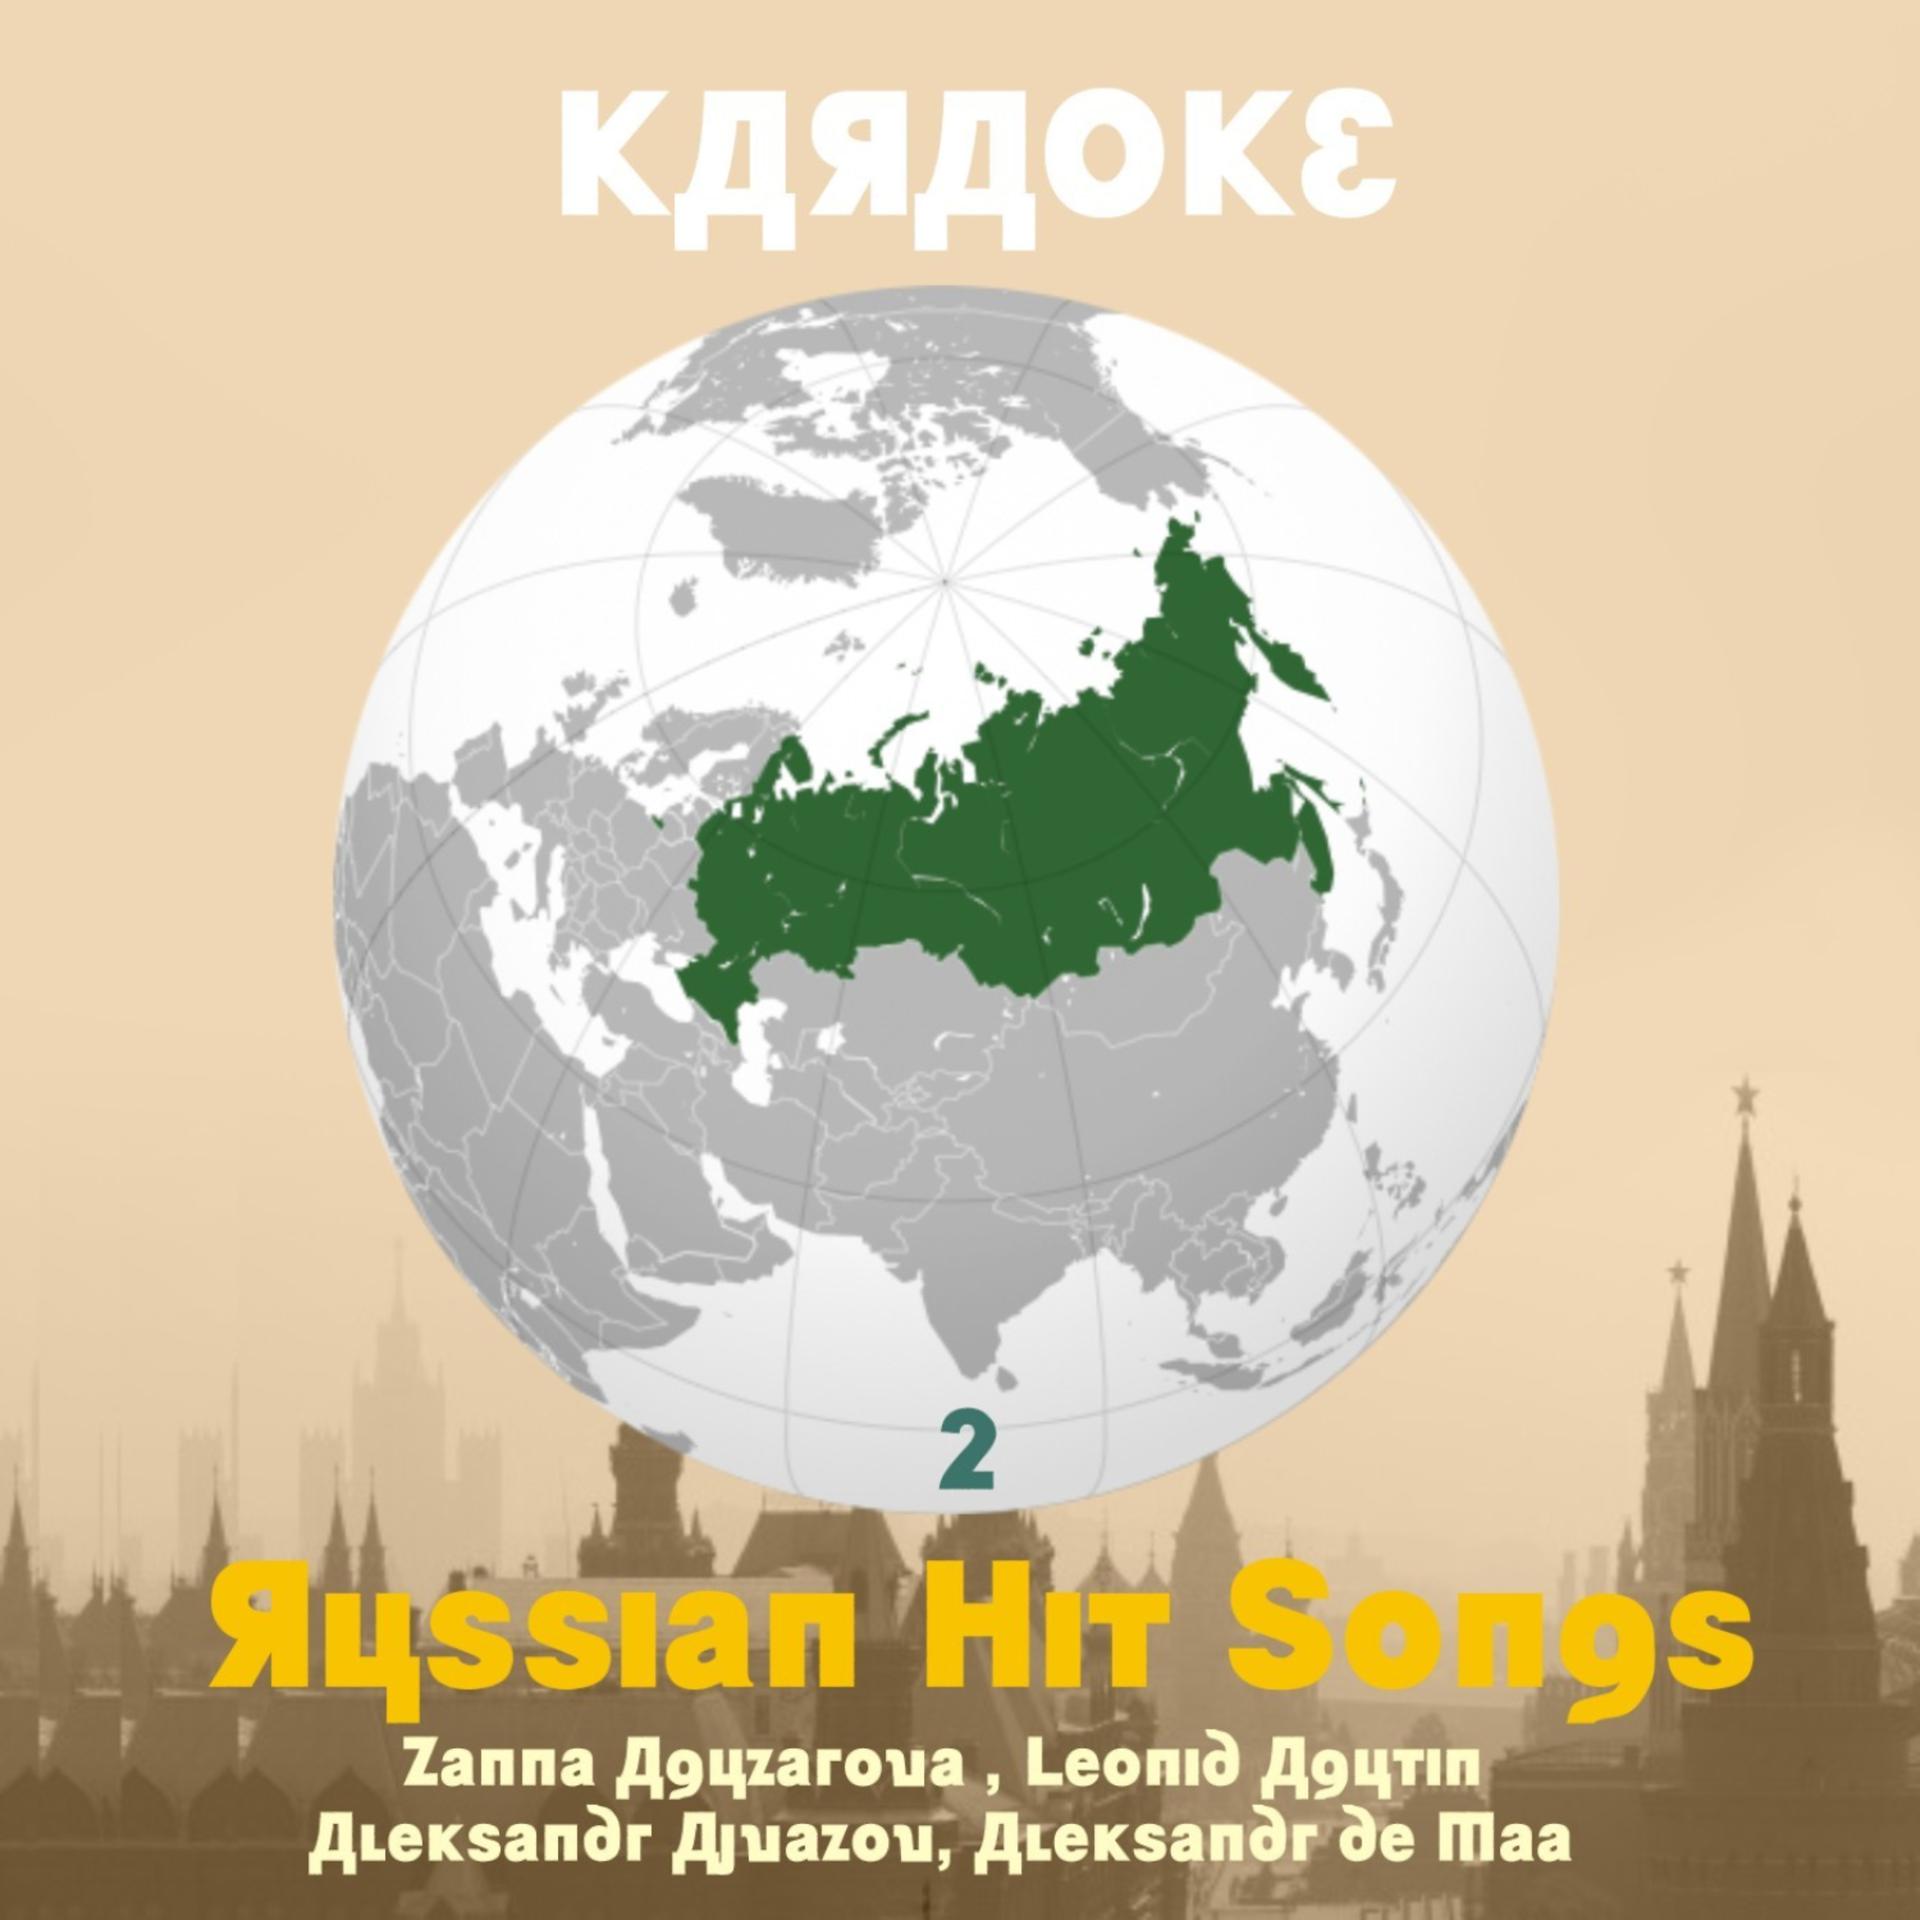 Постер альбома Karaoke, Russian Hit Songs (Žanna Aguzarova , Leonid Agutin , Aleksandr Ajvazov, Aleksandr de Maa), Volume 2